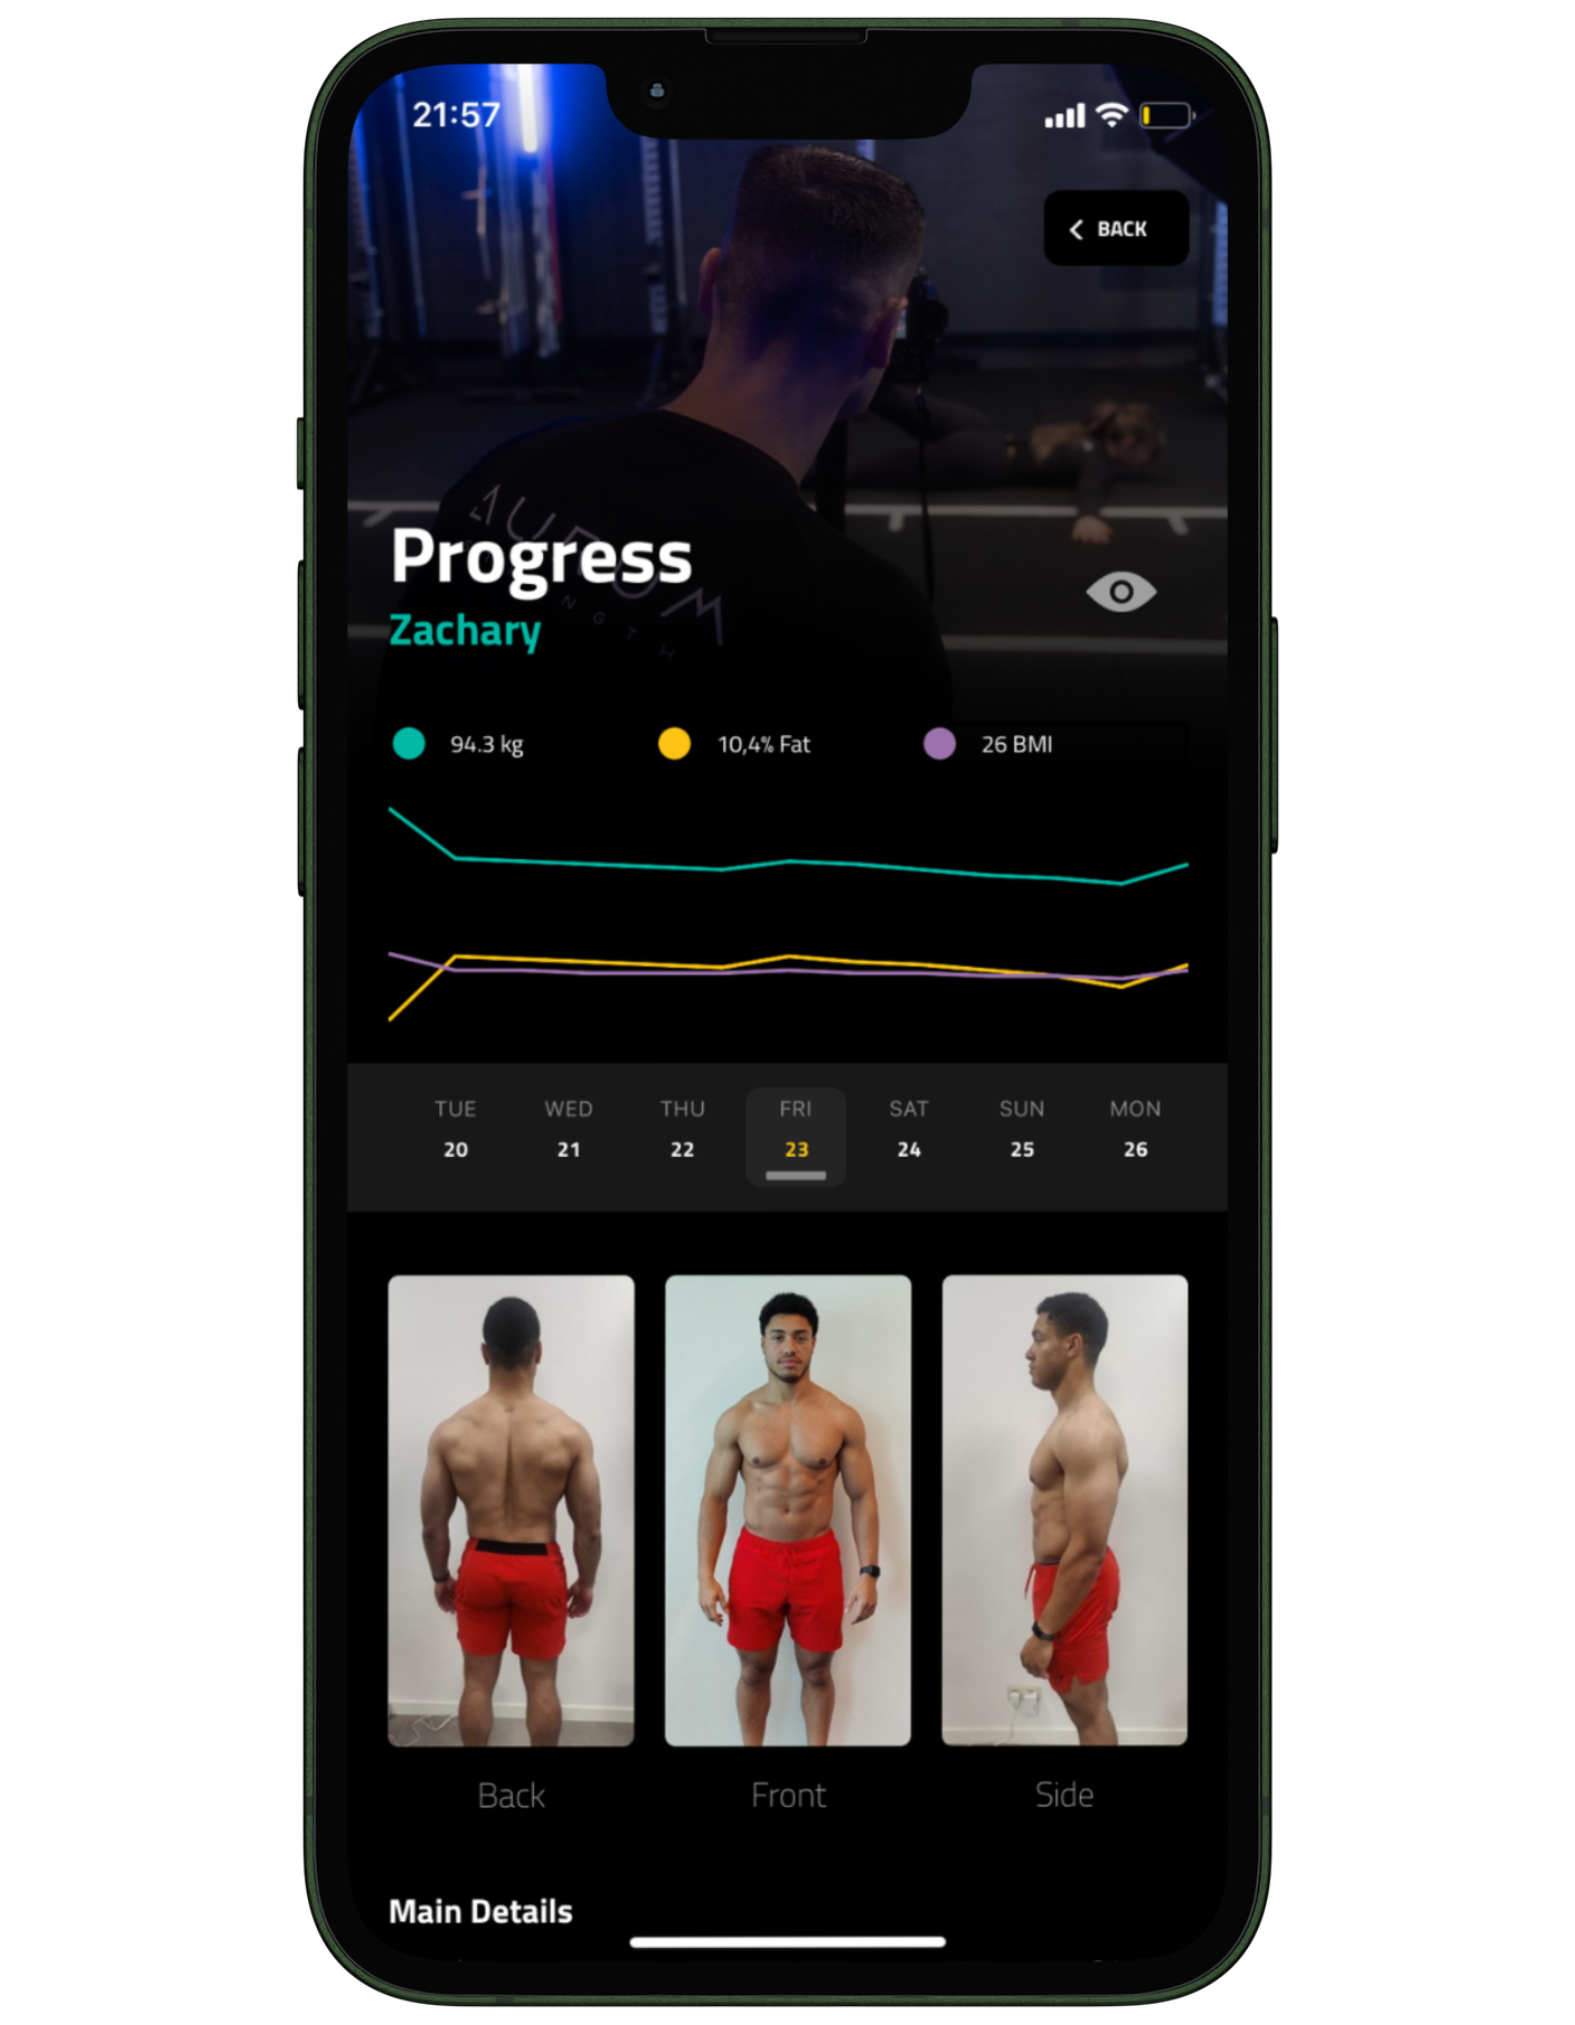 Progress tracking through progress photos, bodyfat calculations, skinfold measurements, weight, BMI, …